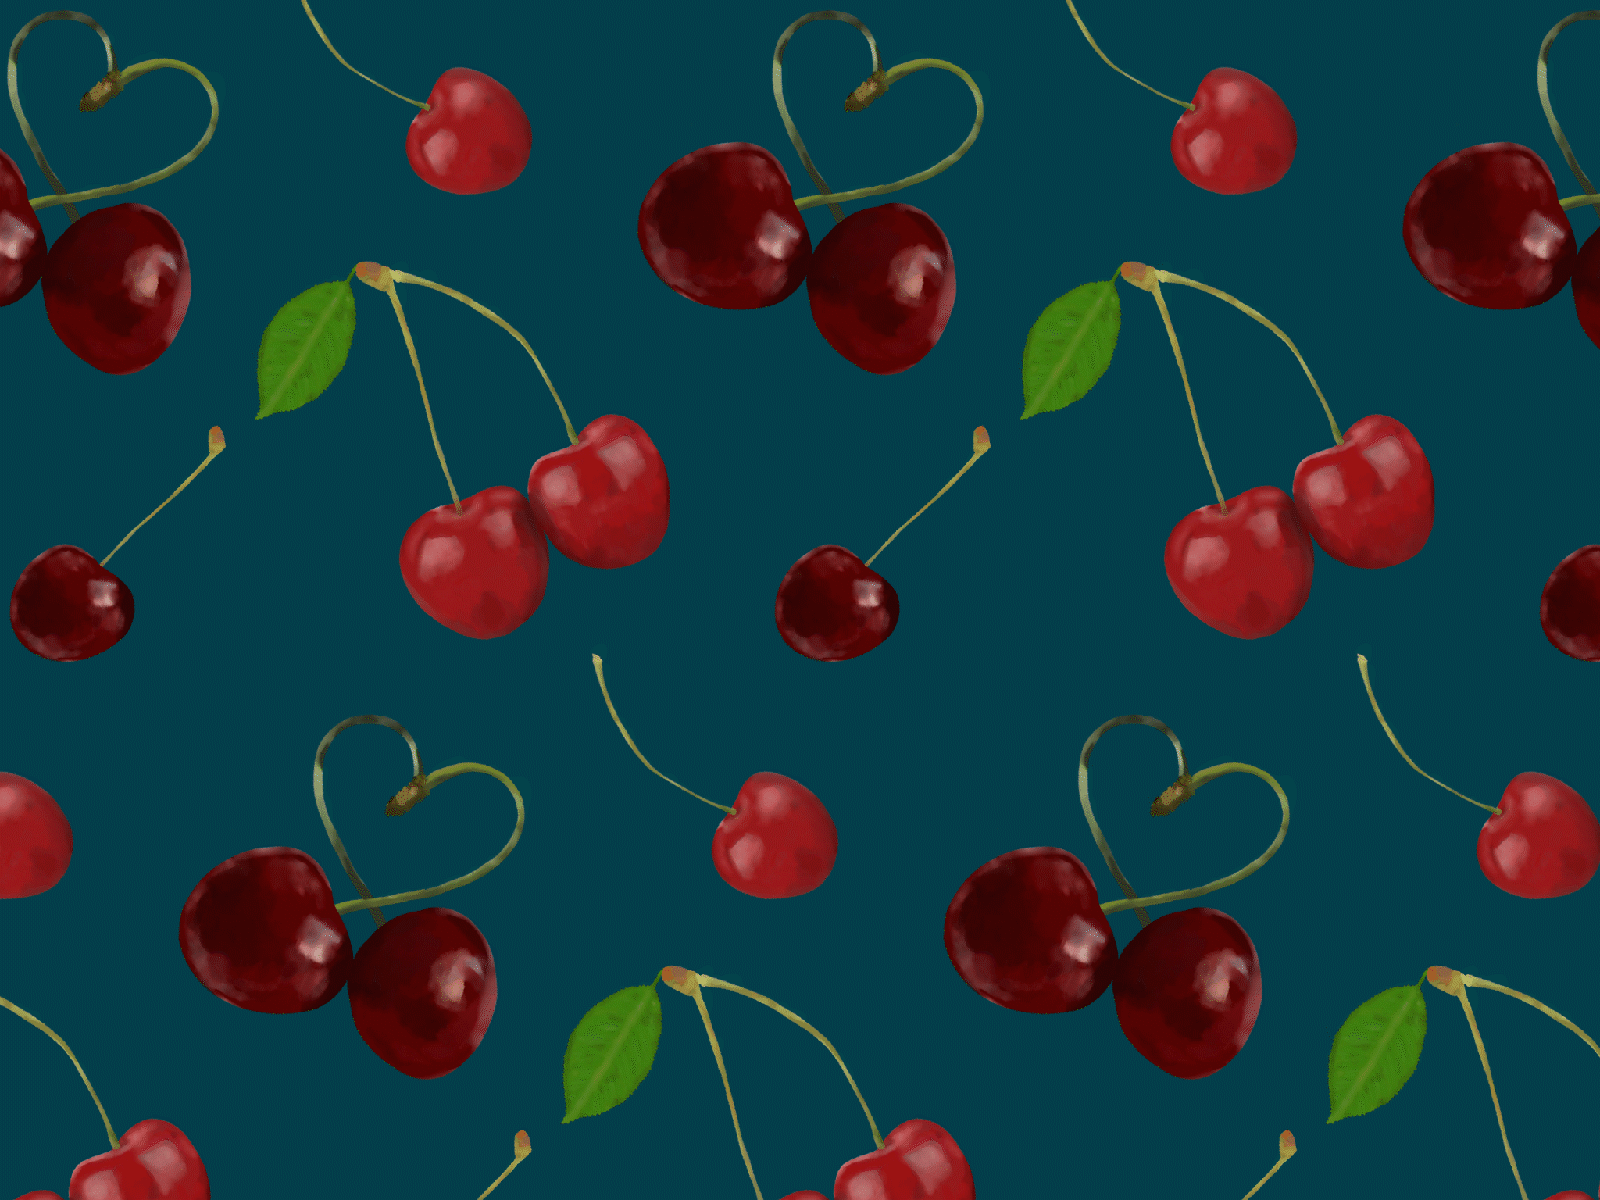 Cherry pattern 🍒 GIF - animated background by Sylwia Staszewska on Dribbble